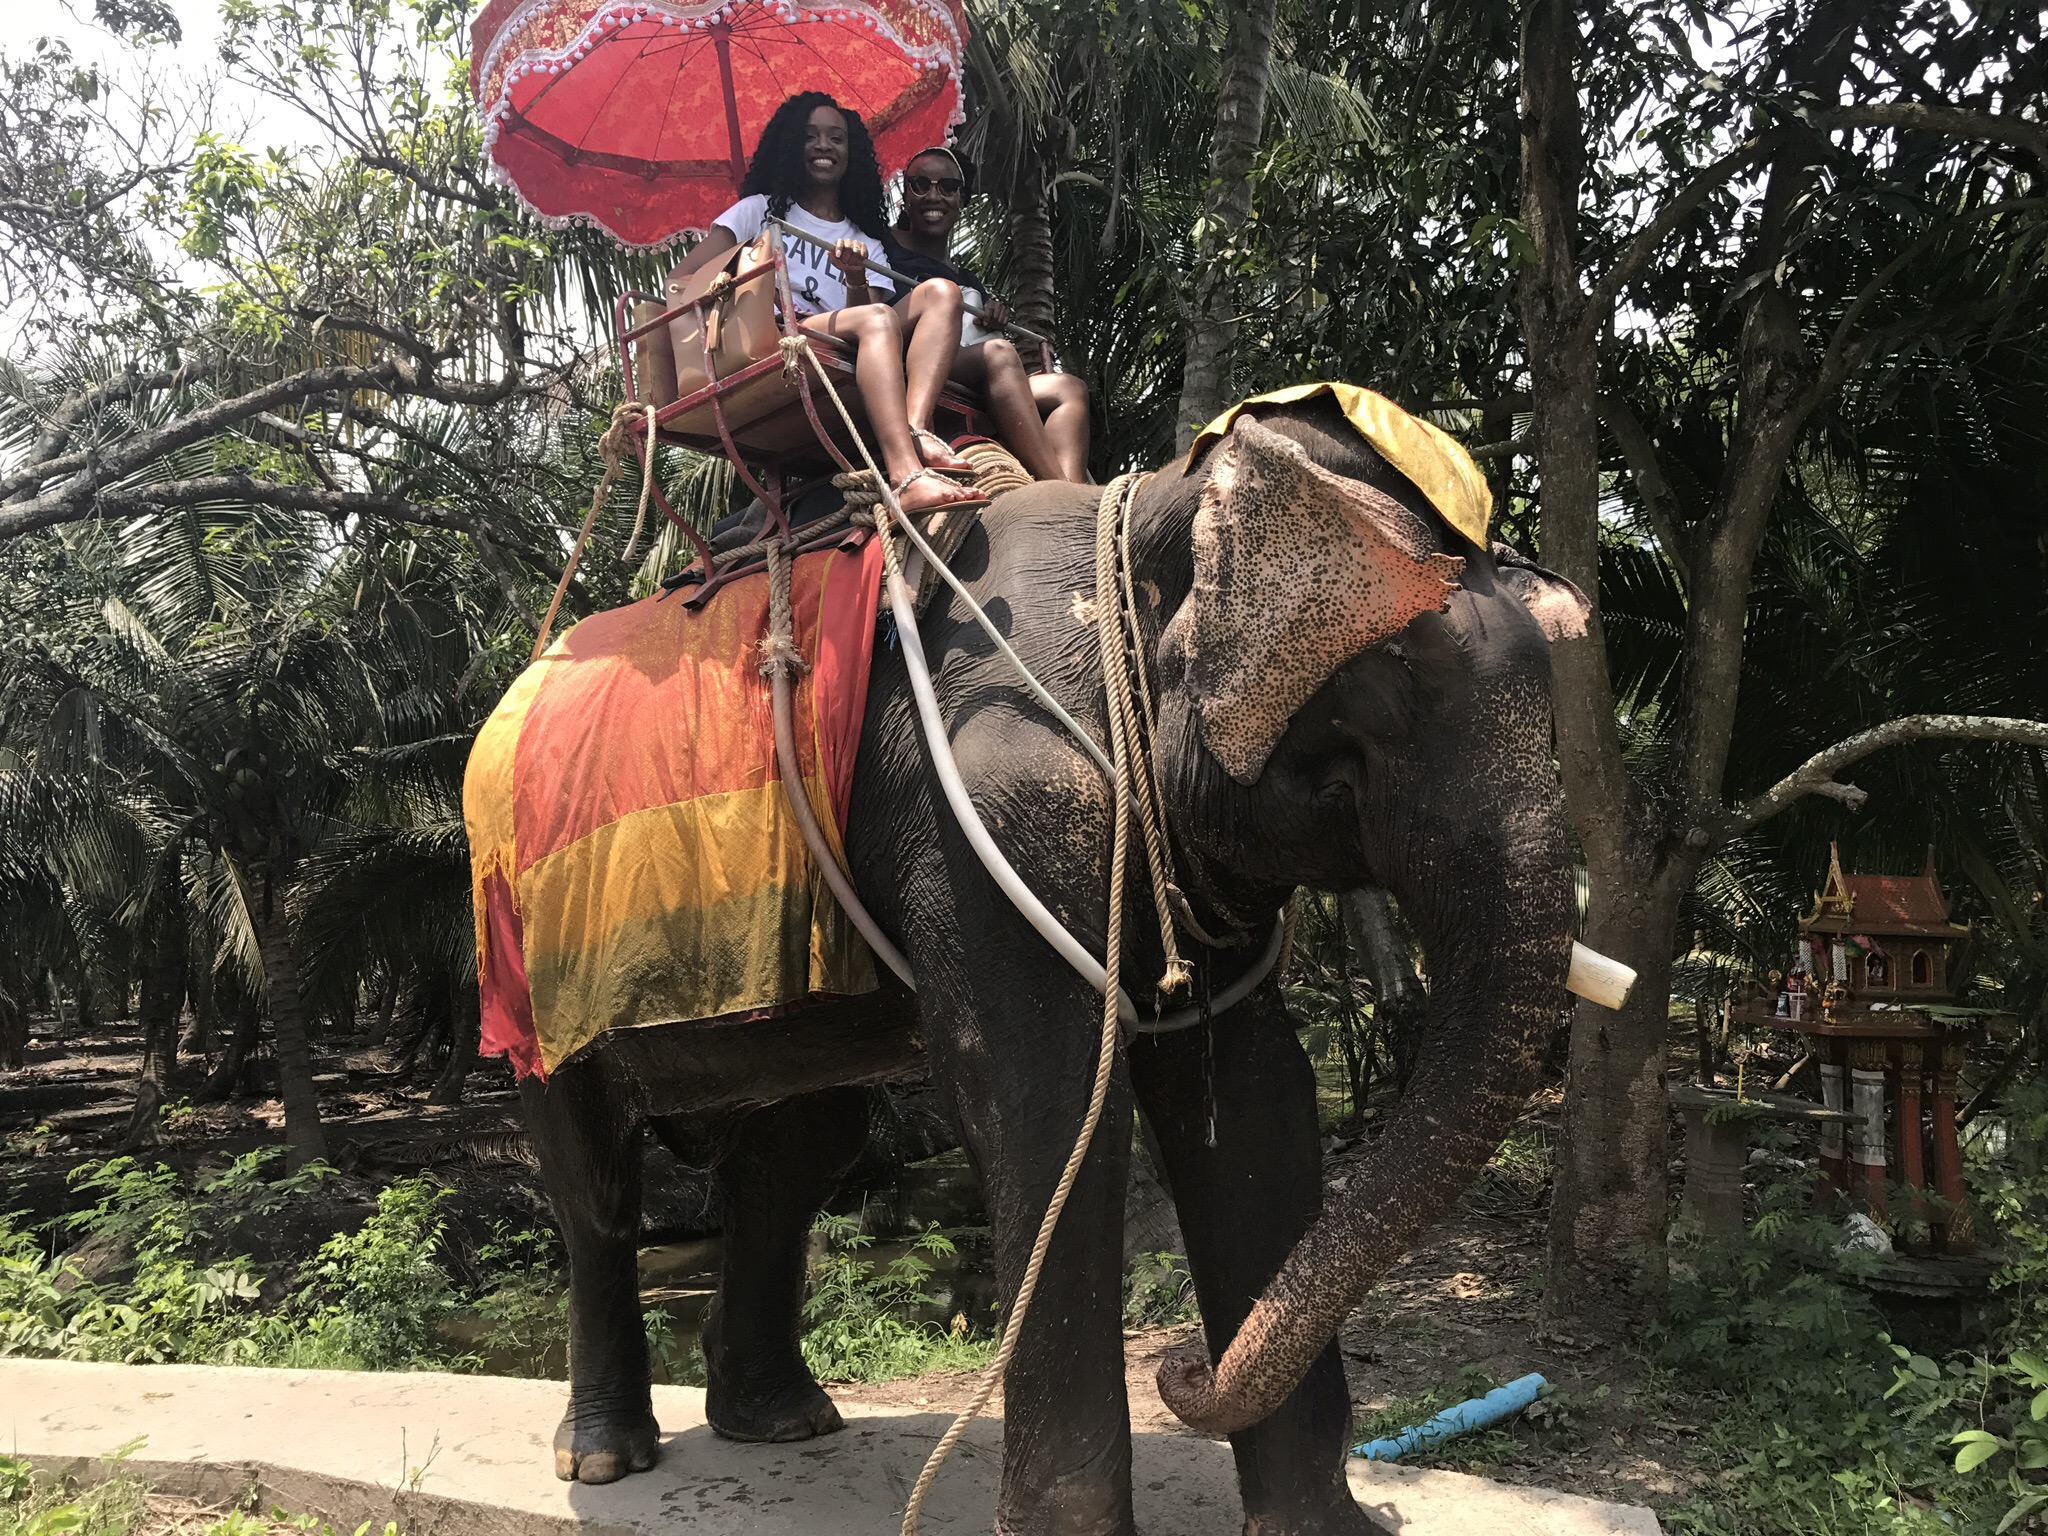 Travel diary: Bangkok, Thailand – Day 3 – Floating market & elephant ride